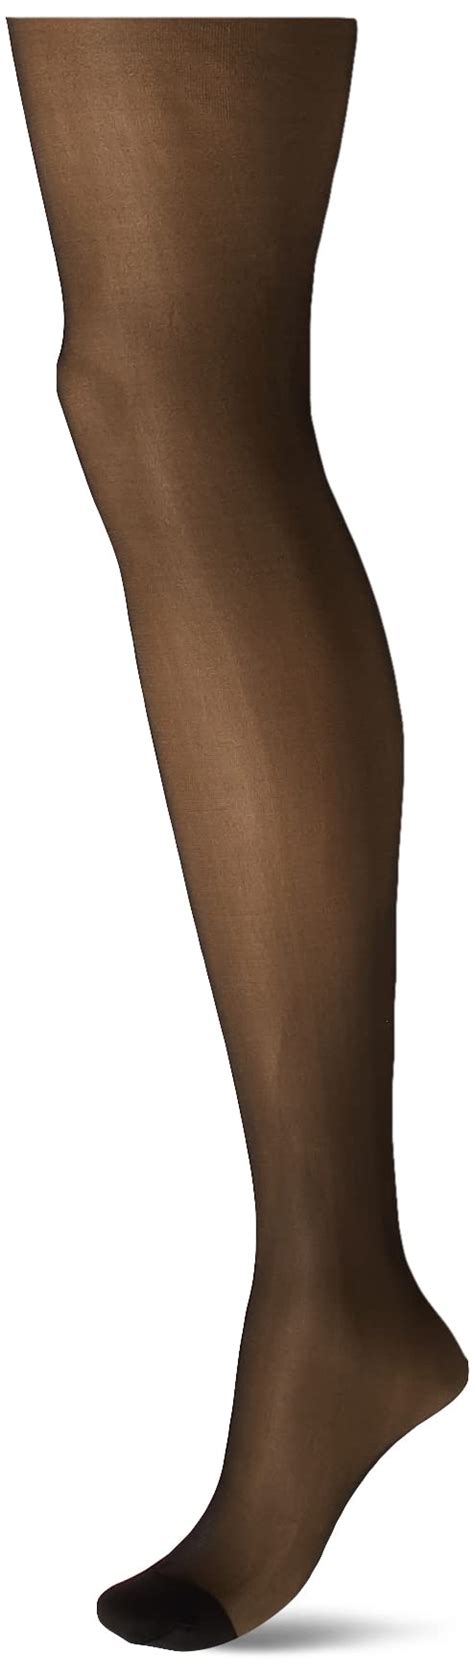 Buy Berkshire Women S Plus Size Queen Silky Sheer Control Top Pantyhose 4489 Online At Desertcartuae